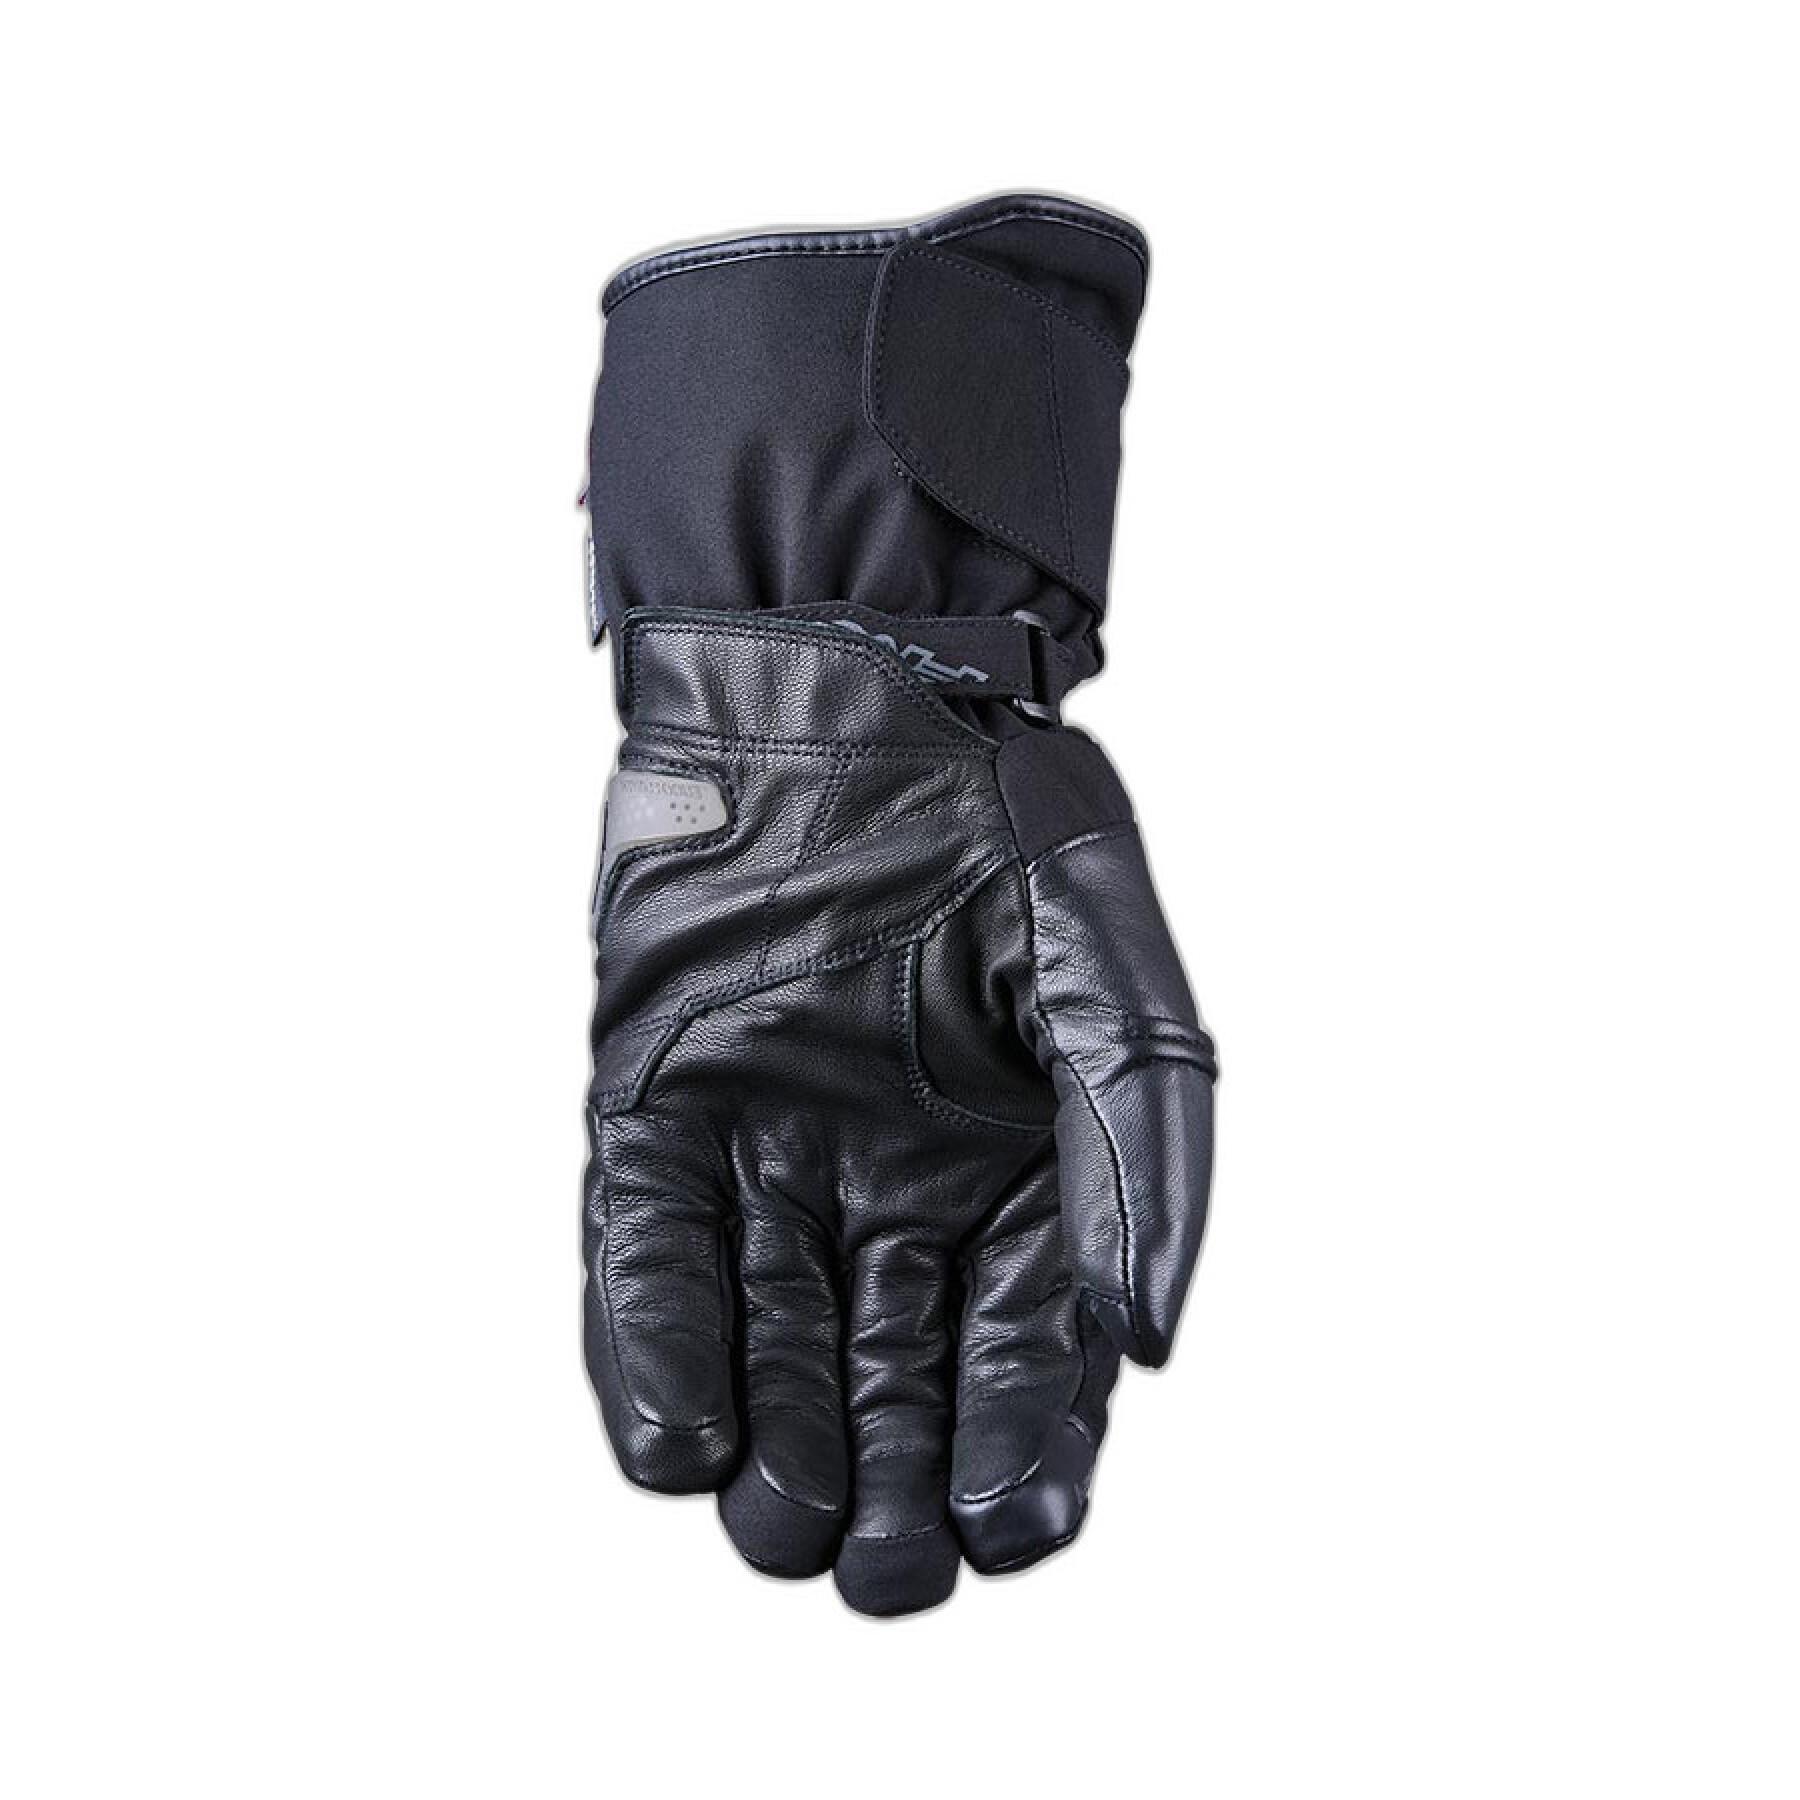 Winter motorcycle gloves Five WFX Skin Evo GTX